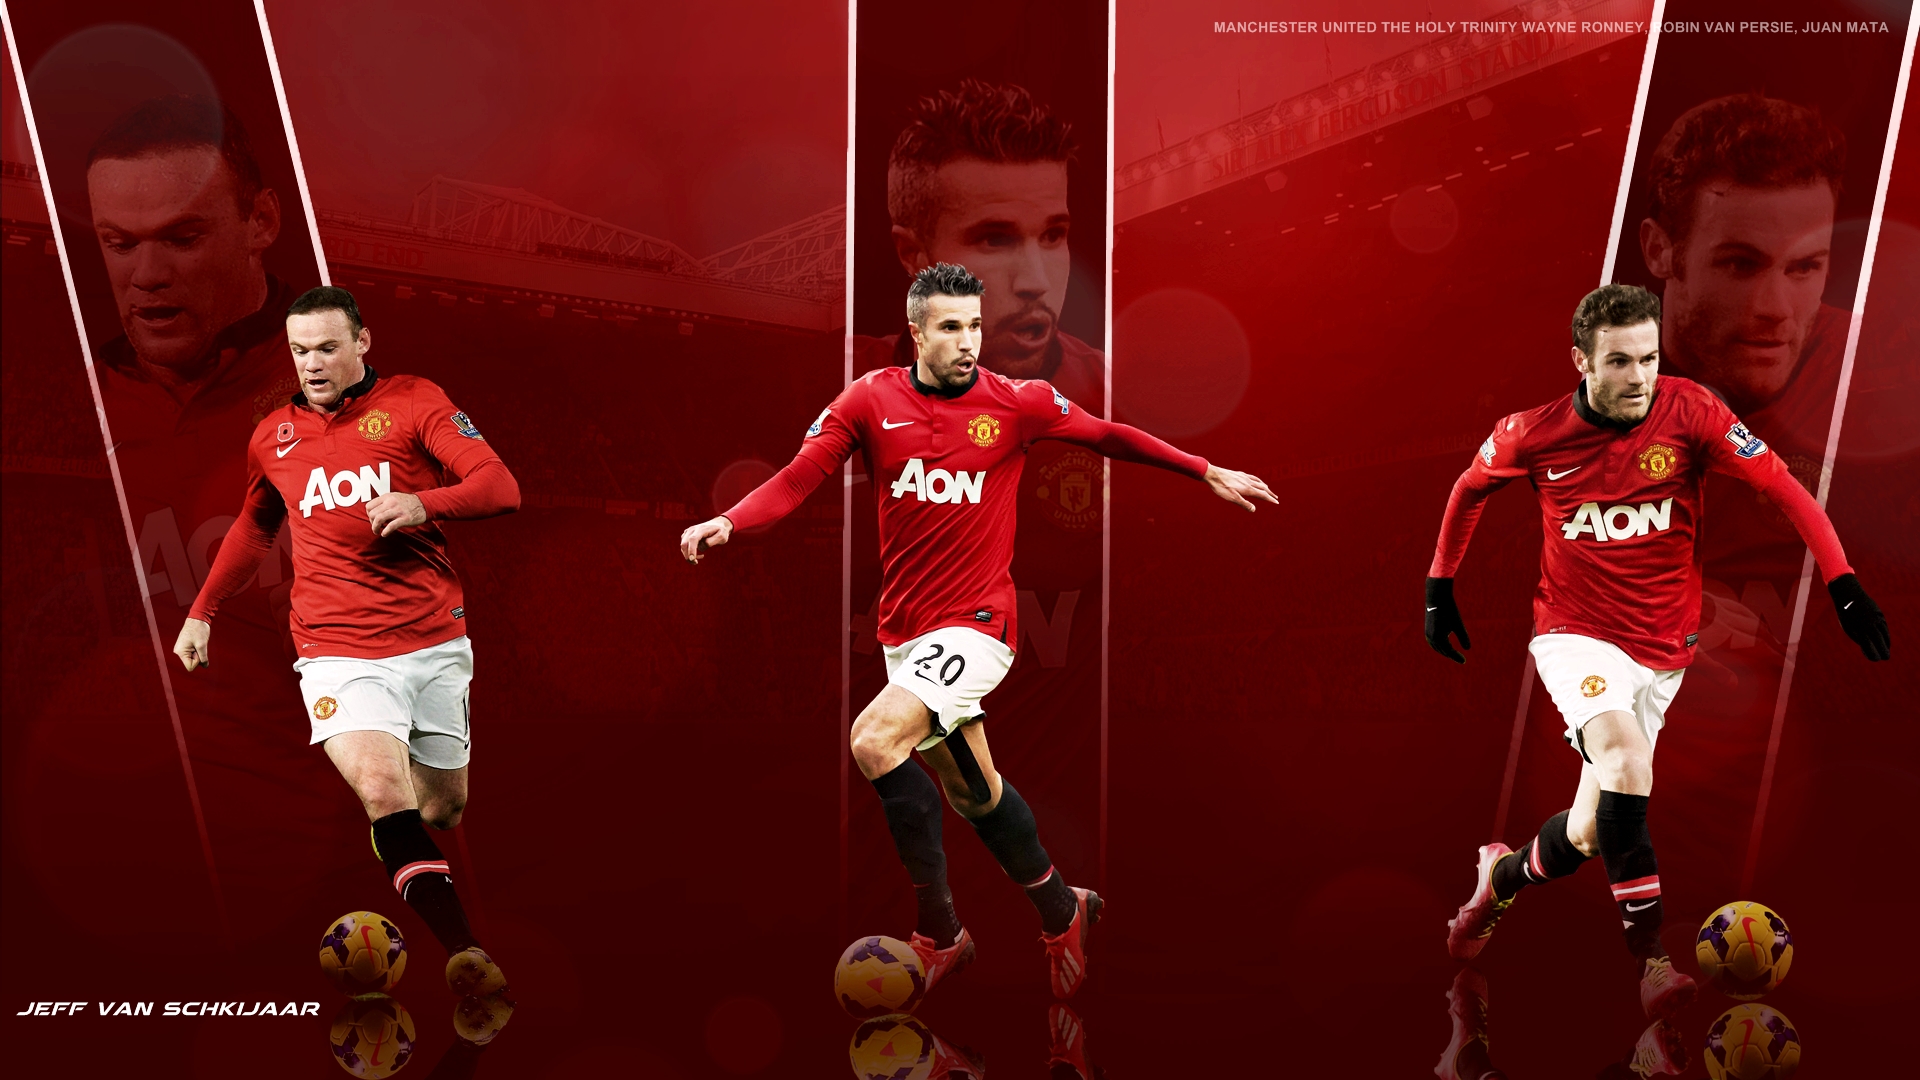 Manchester United Rooney / Rvp / Mata Wallpaper Hd - Wayne Rooney And Van Persie - HD Wallpaper 